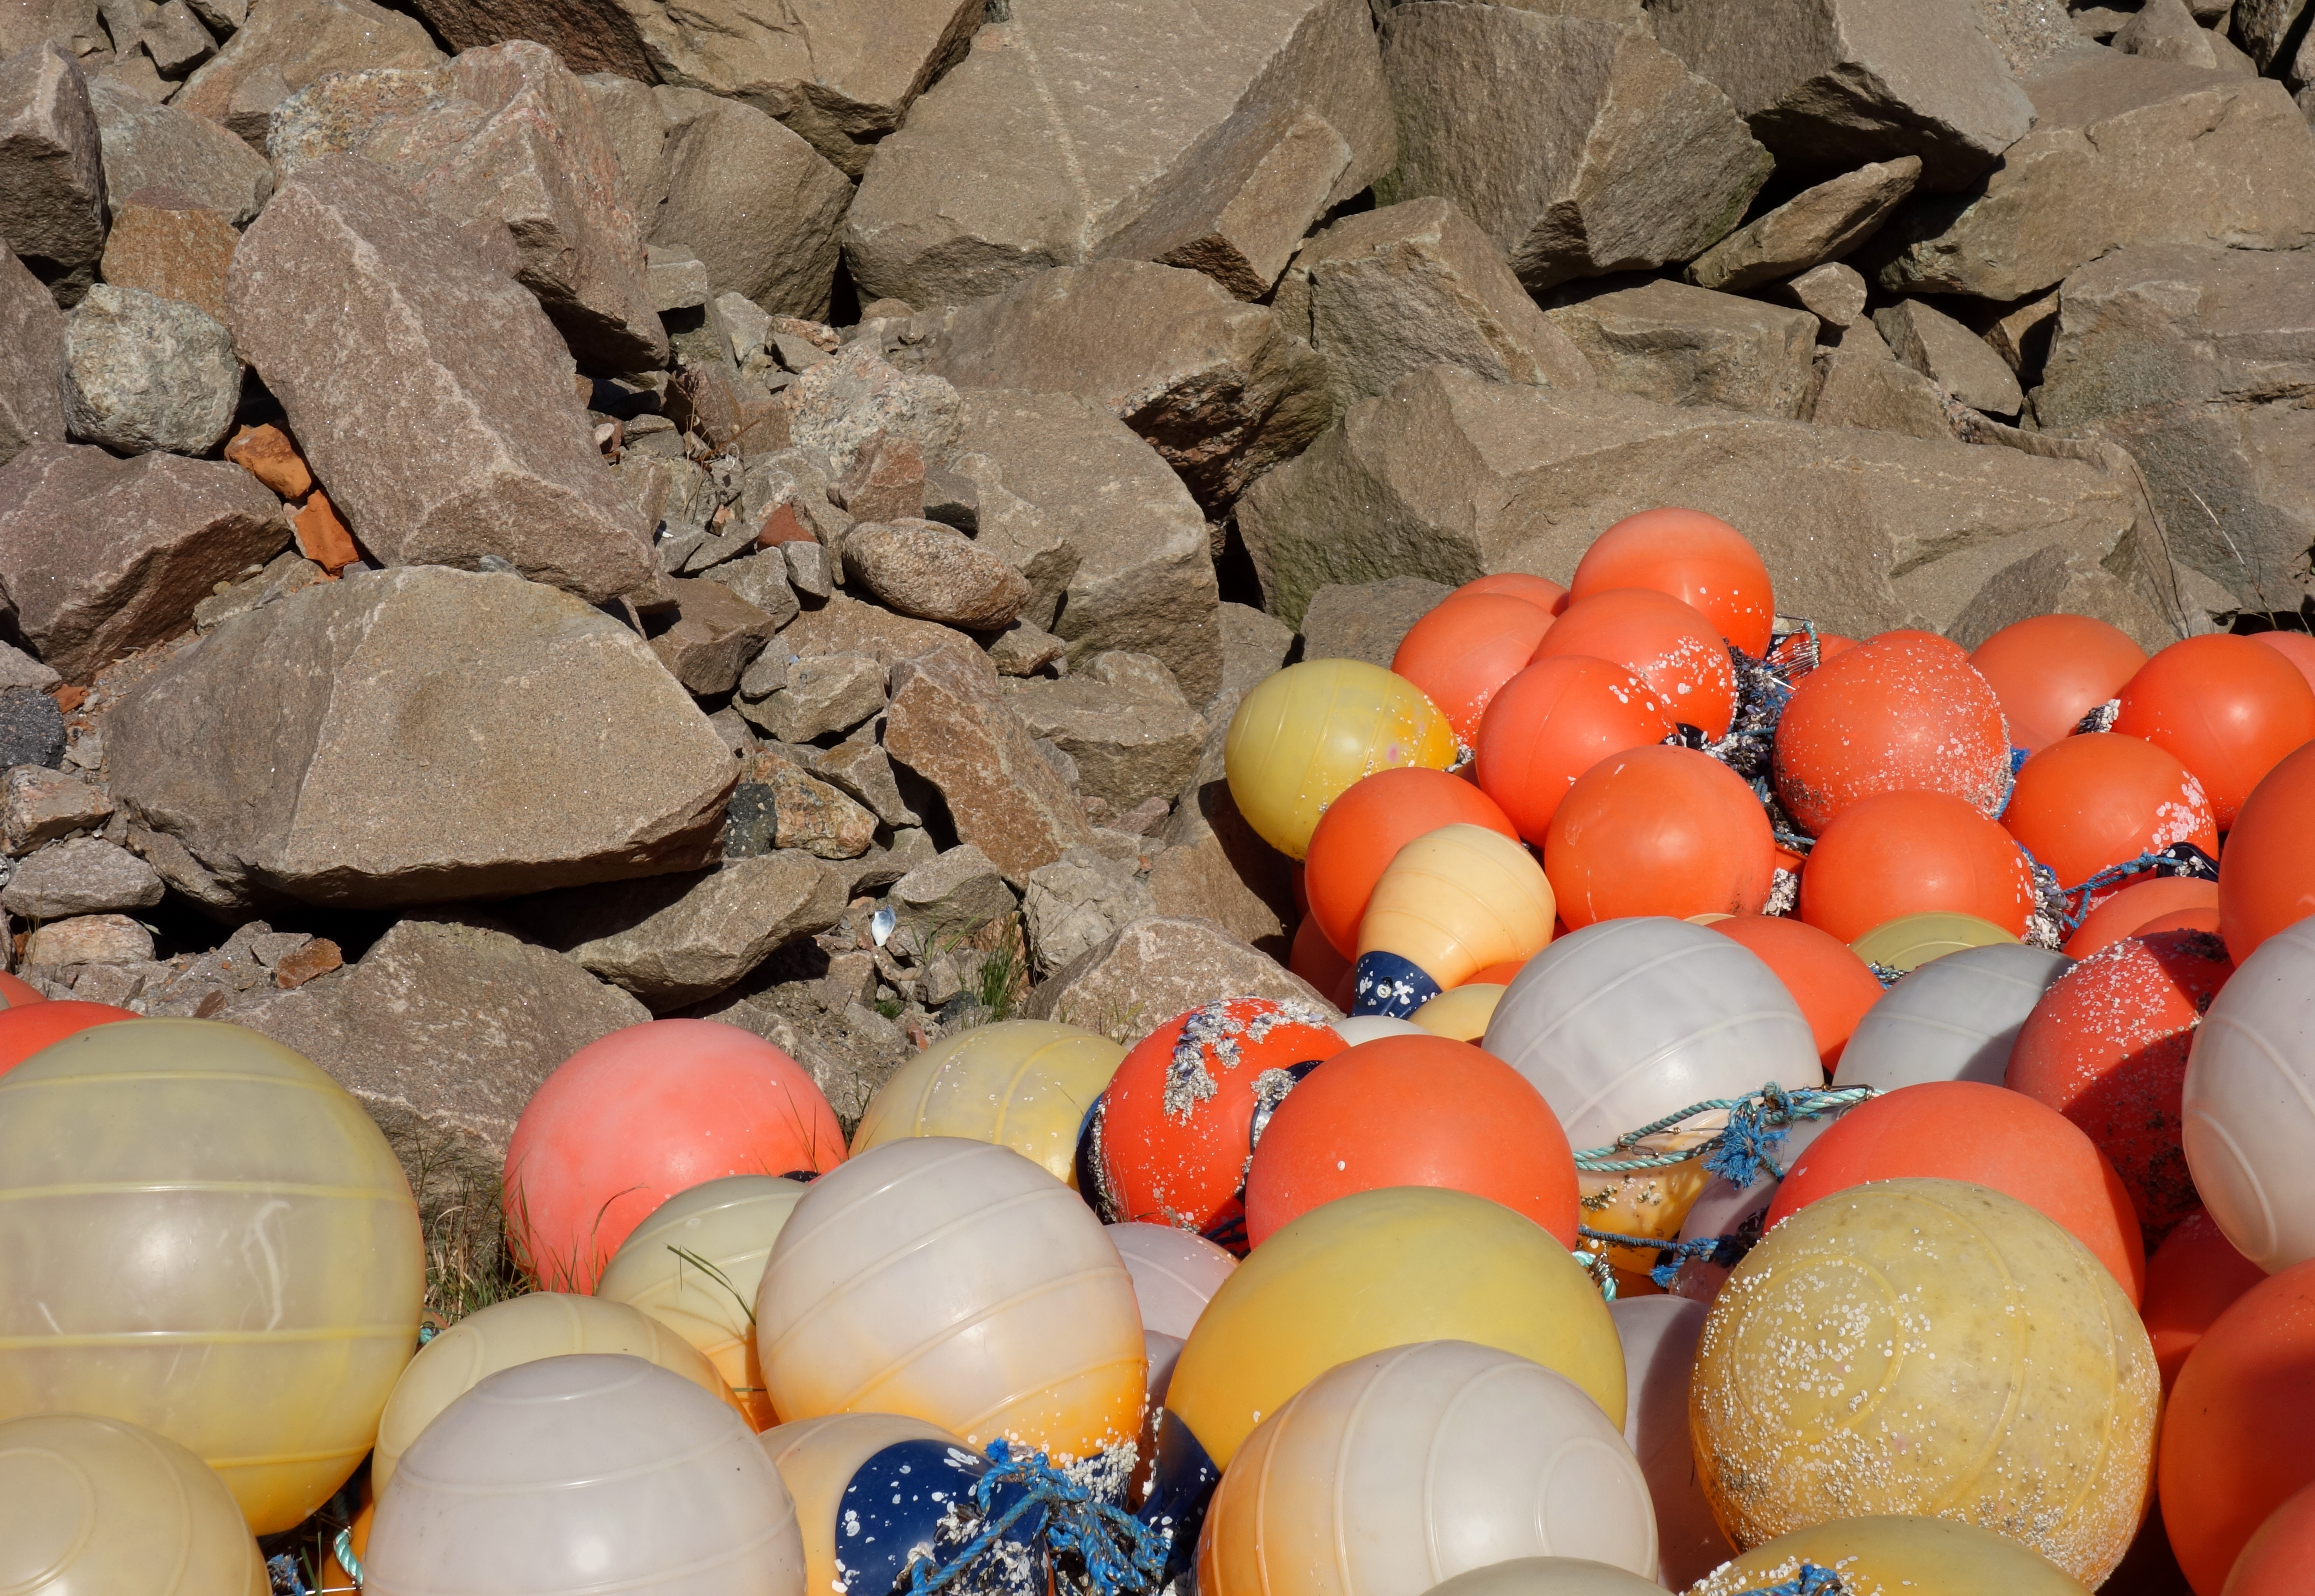 File:Multicolored fishing balls and granite.jpg - Wikimedia Commons